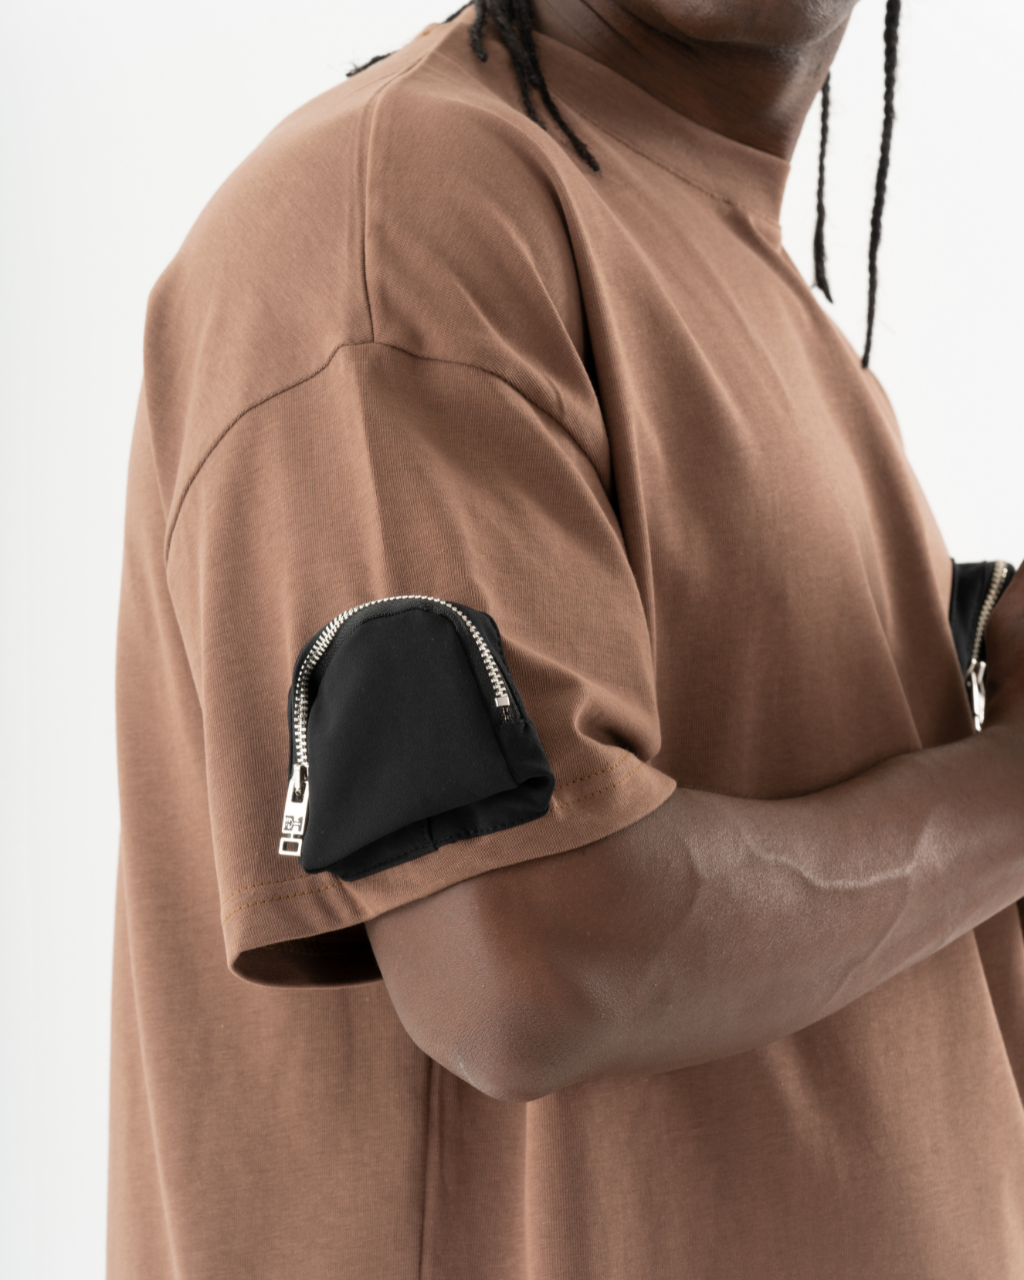 A black man wearing a FATE T-SHIRT with a zippered pocket.